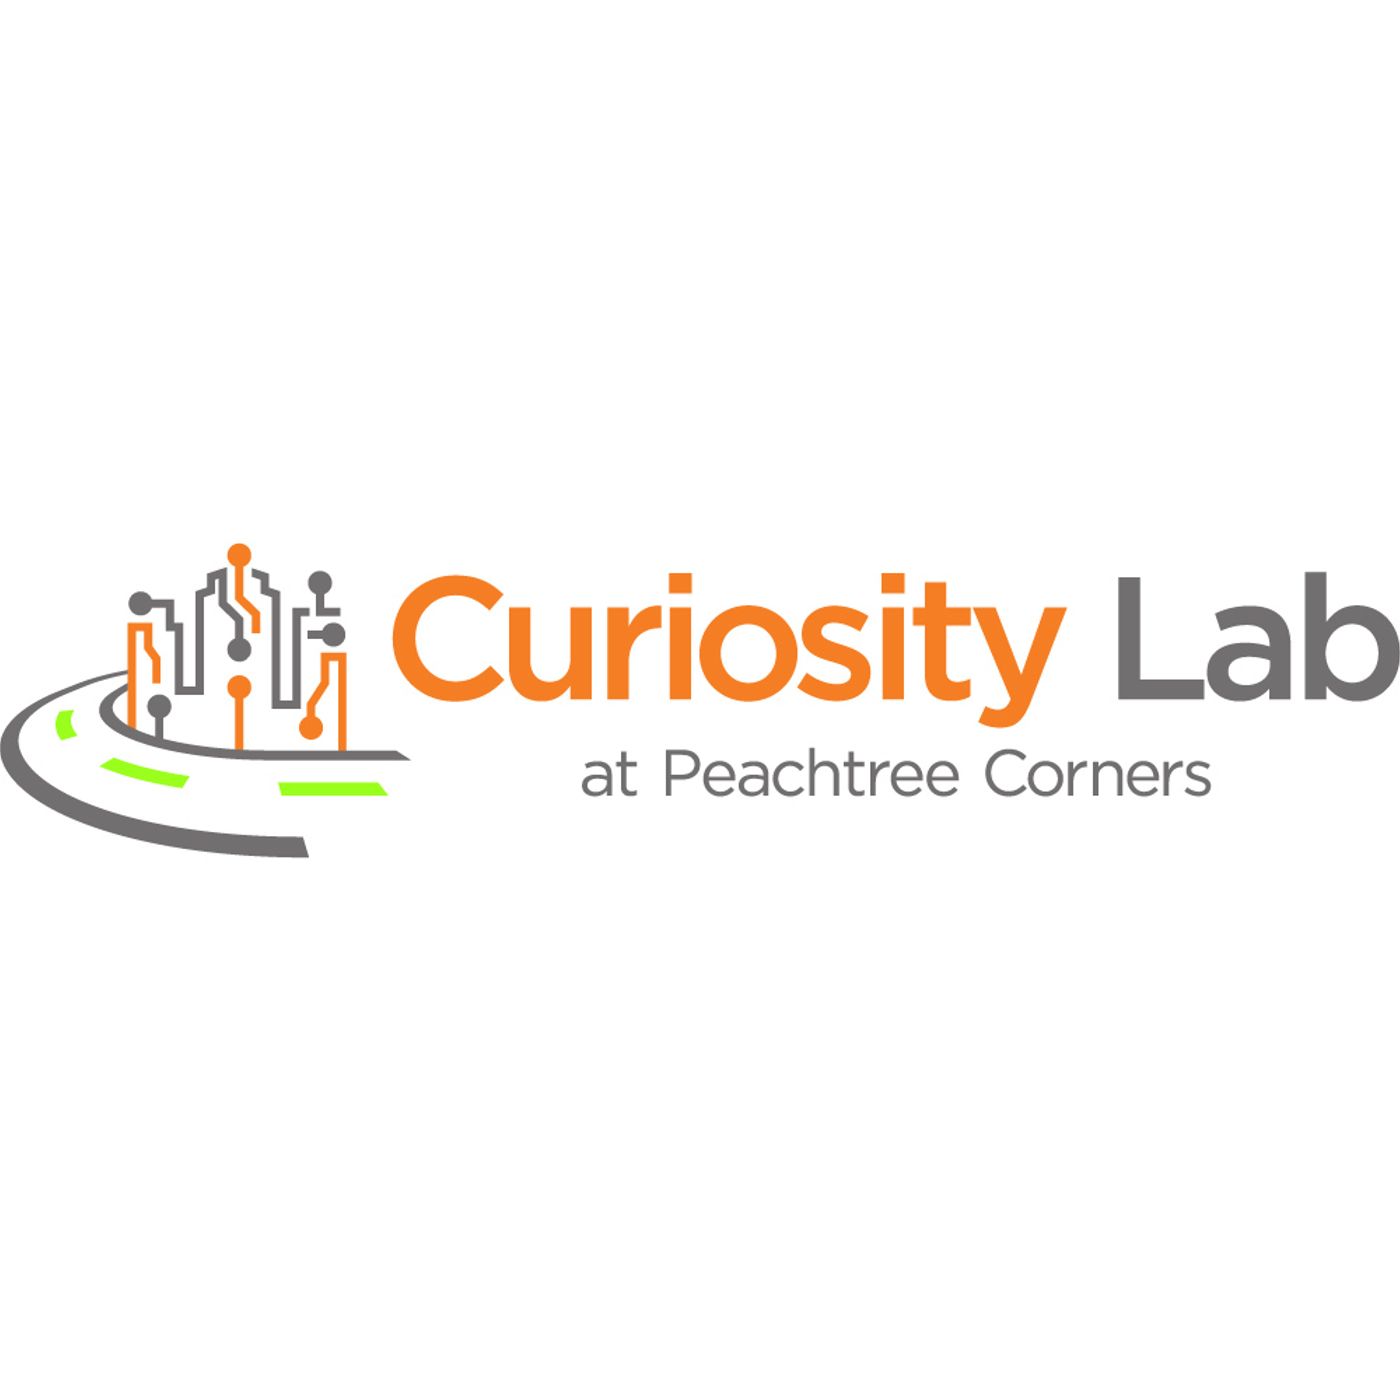 Brandon Branham With Curiosity Lab